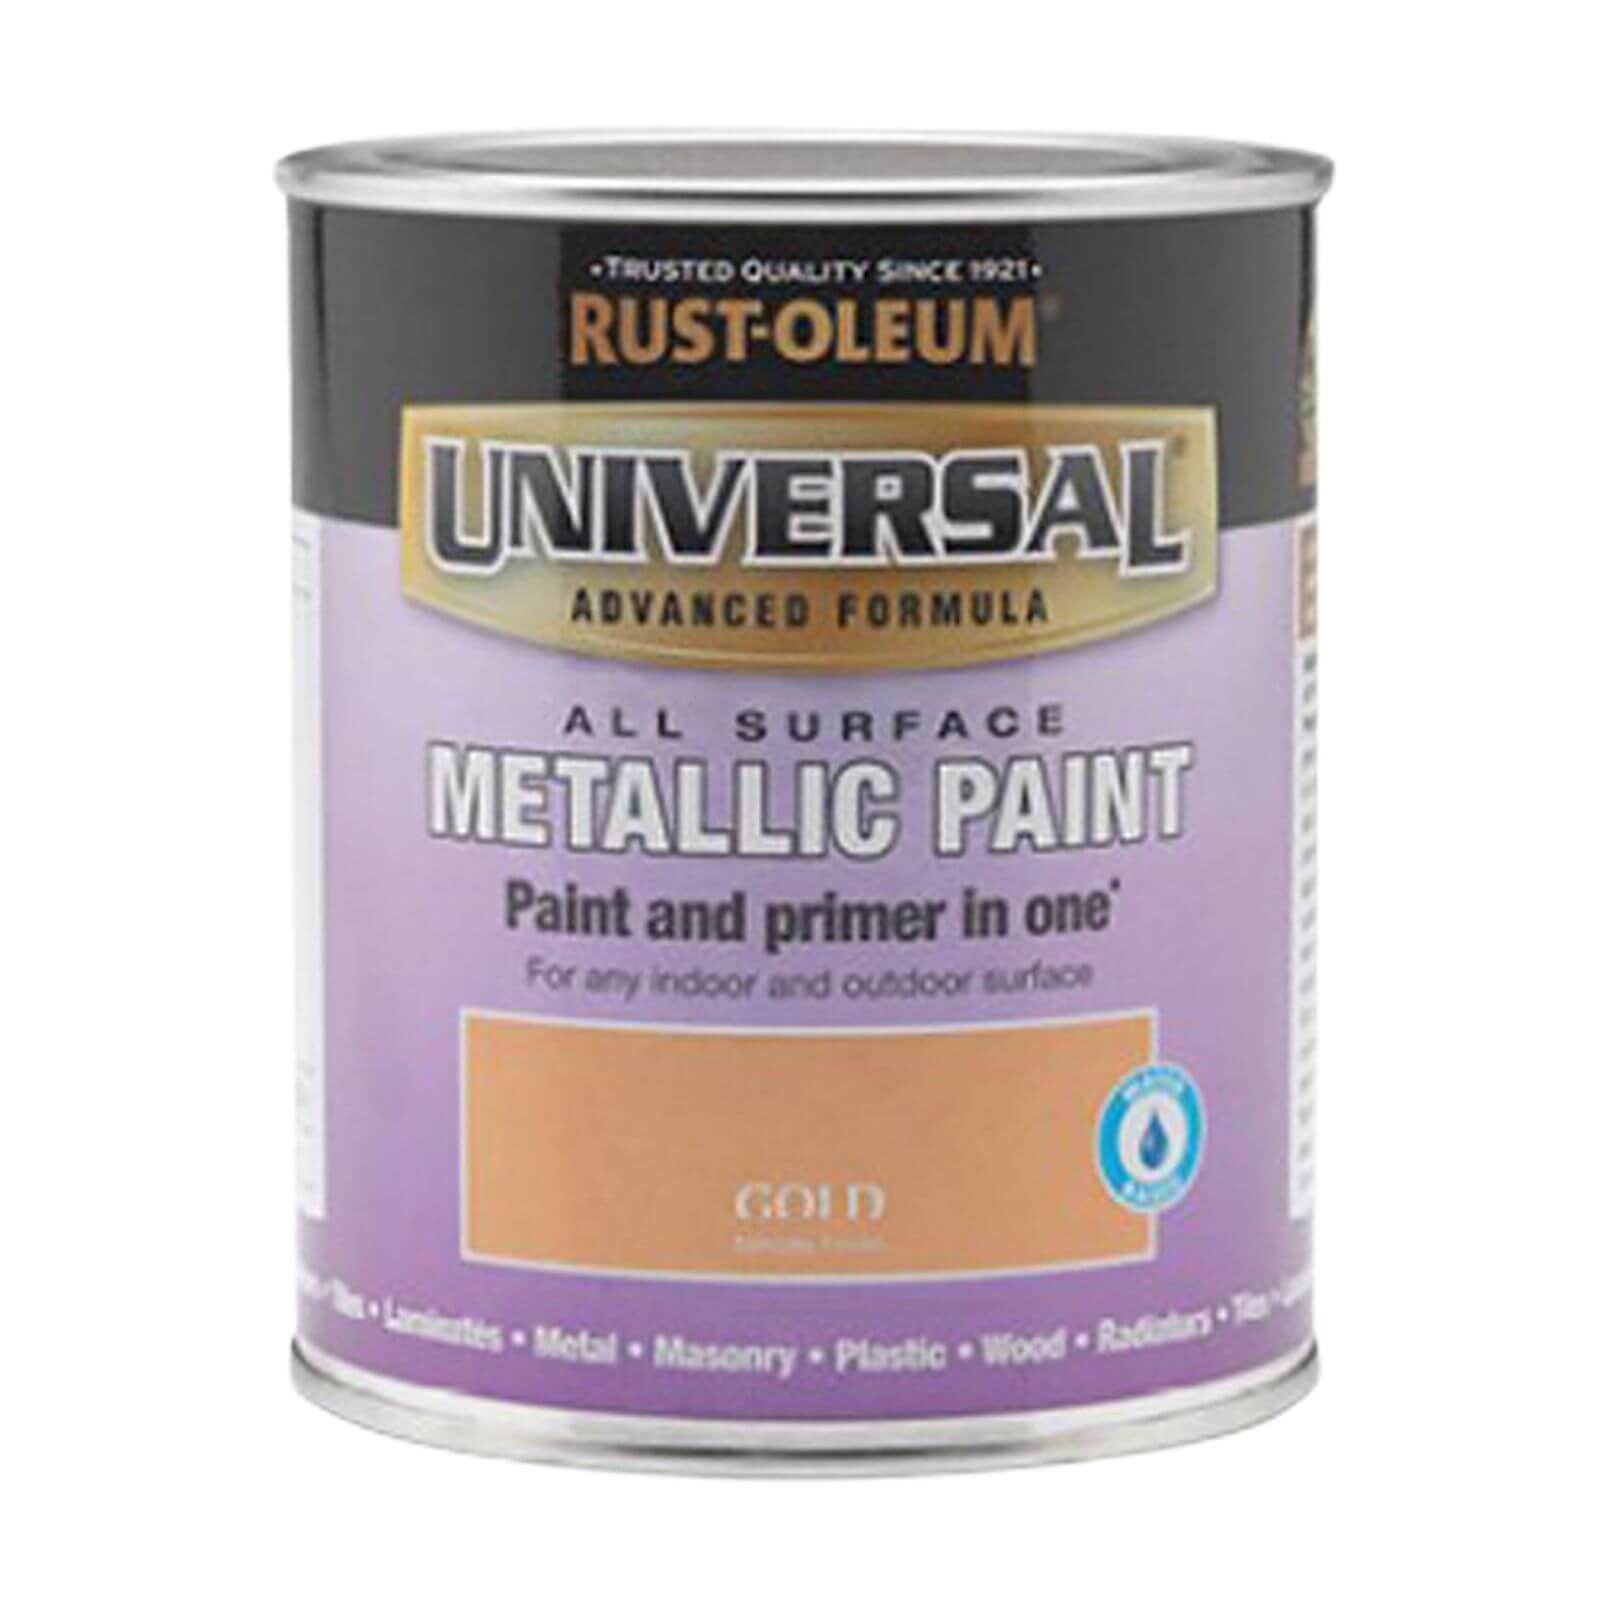 Rust-Oleum Universal All Surface Metallic Paint & Primer - Gold - 250ml